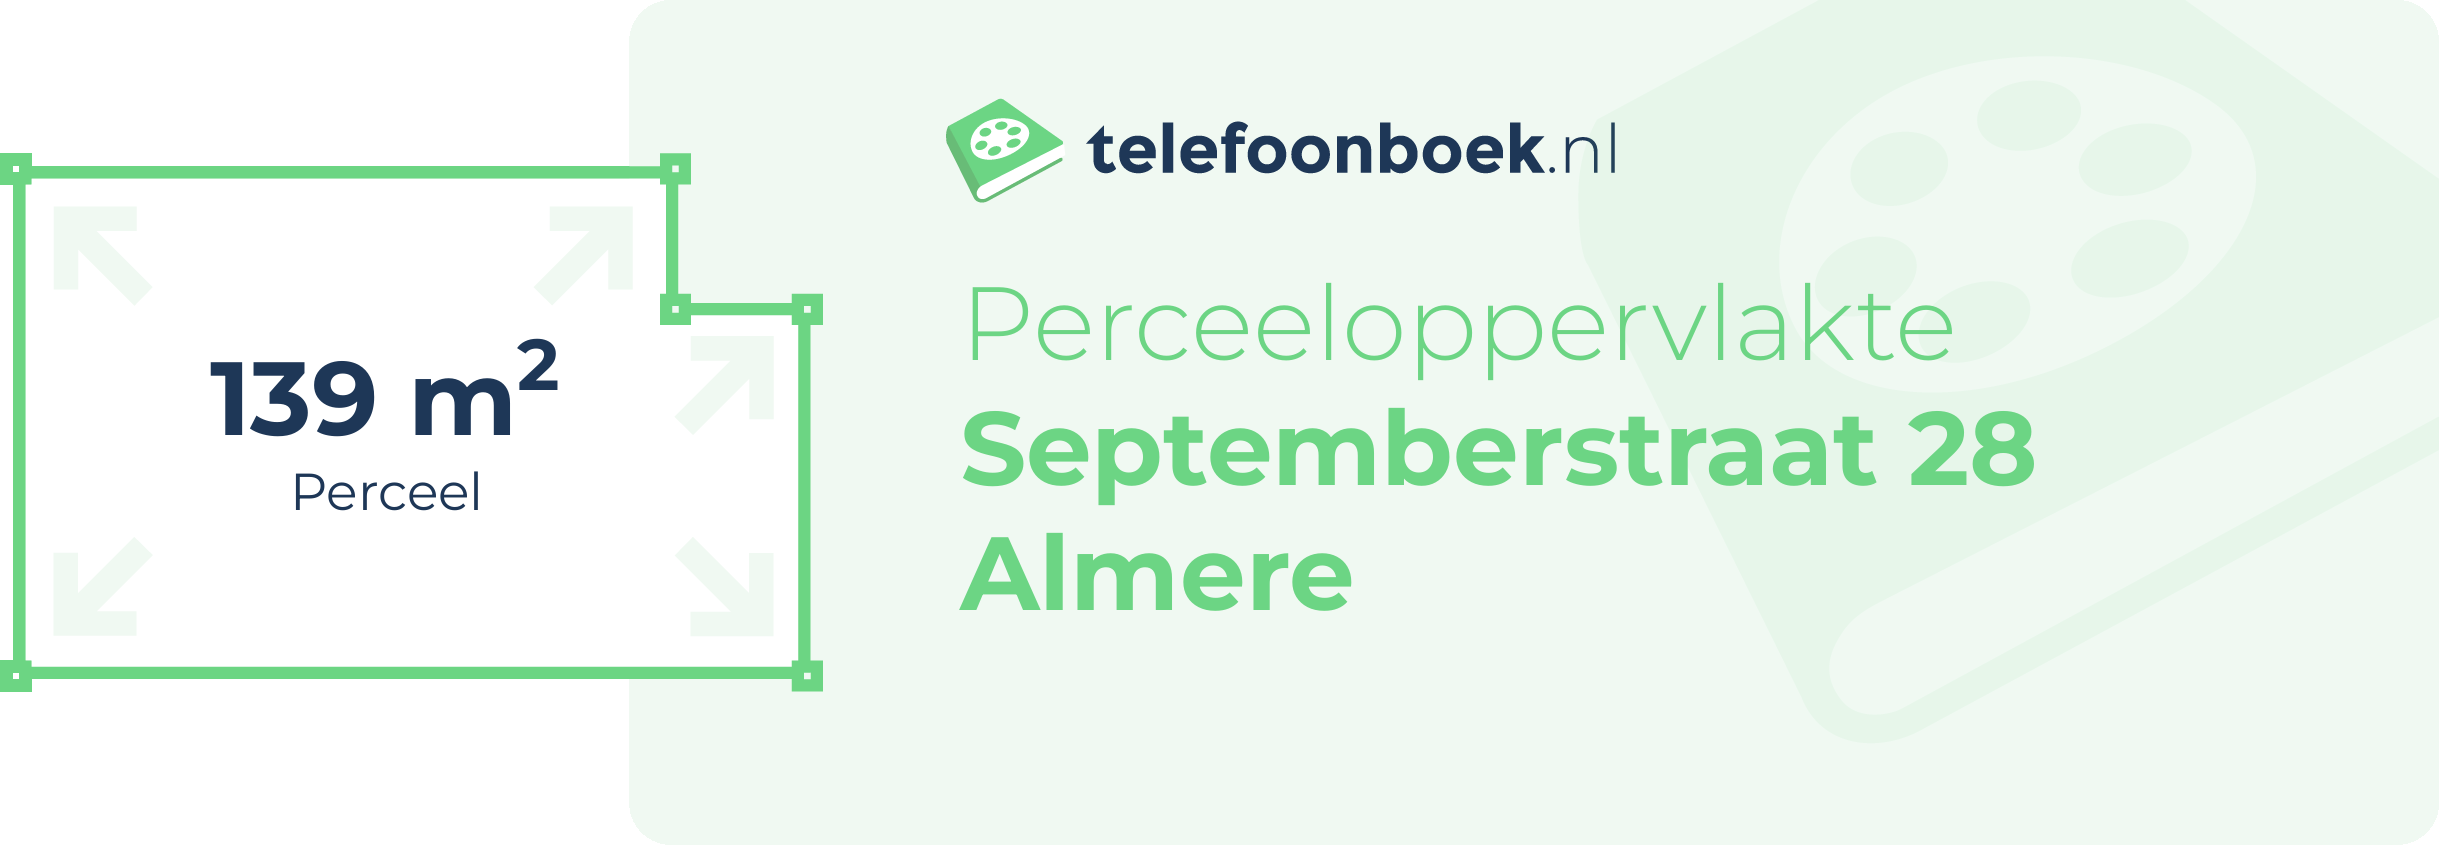 Perceeloppervlakte Septemberstraat 28 Almere